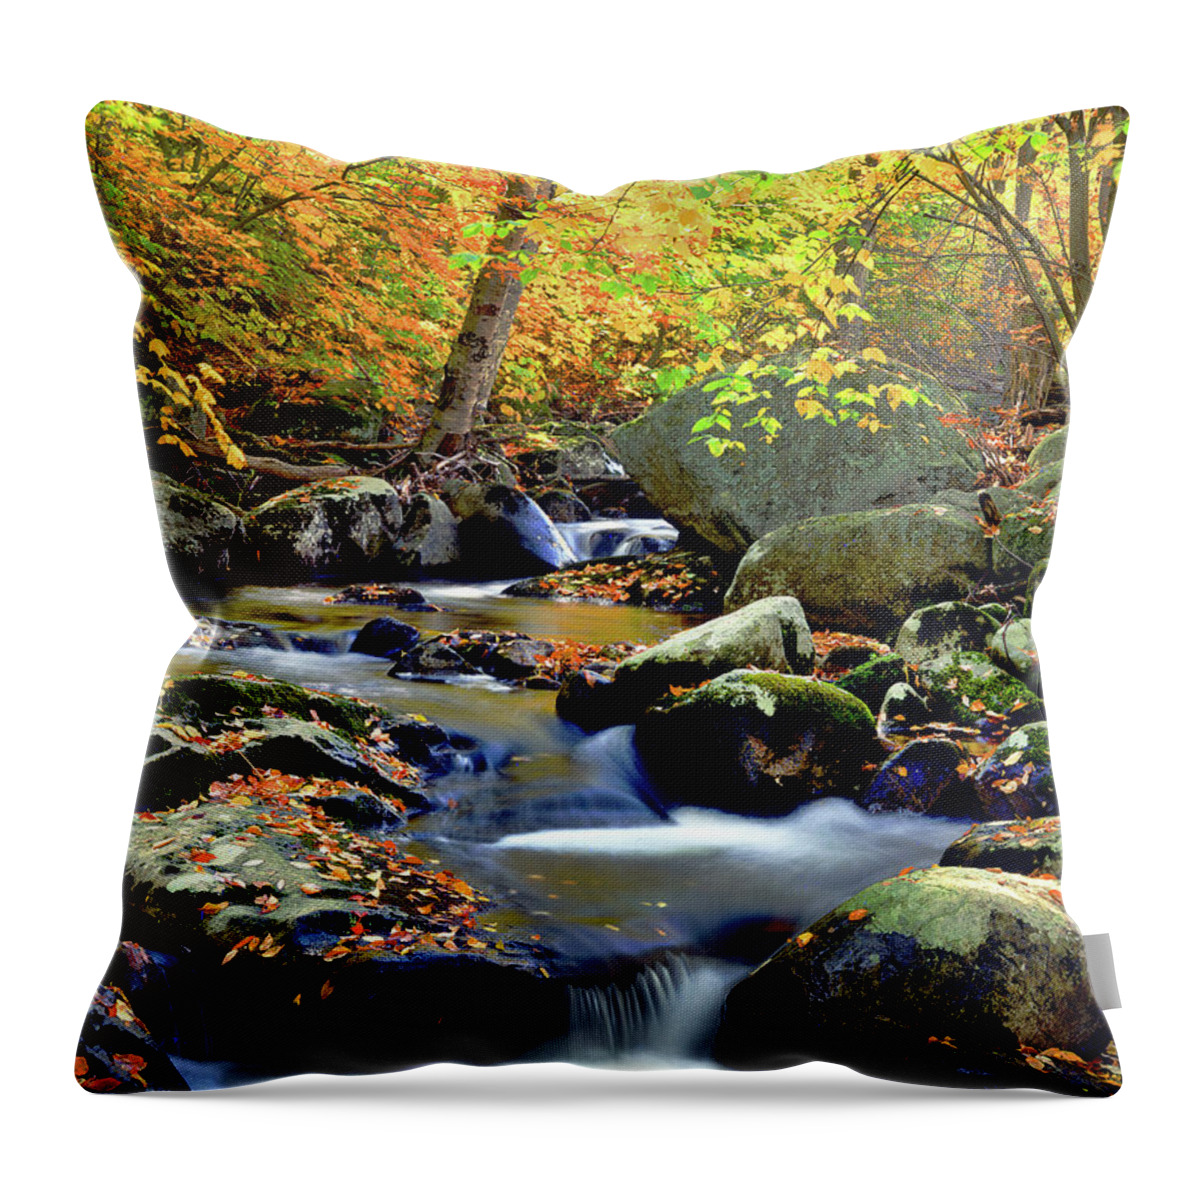 Adirondack Landscape Throw Pillow featuring the photograph Cascade Brook by Frank Houck